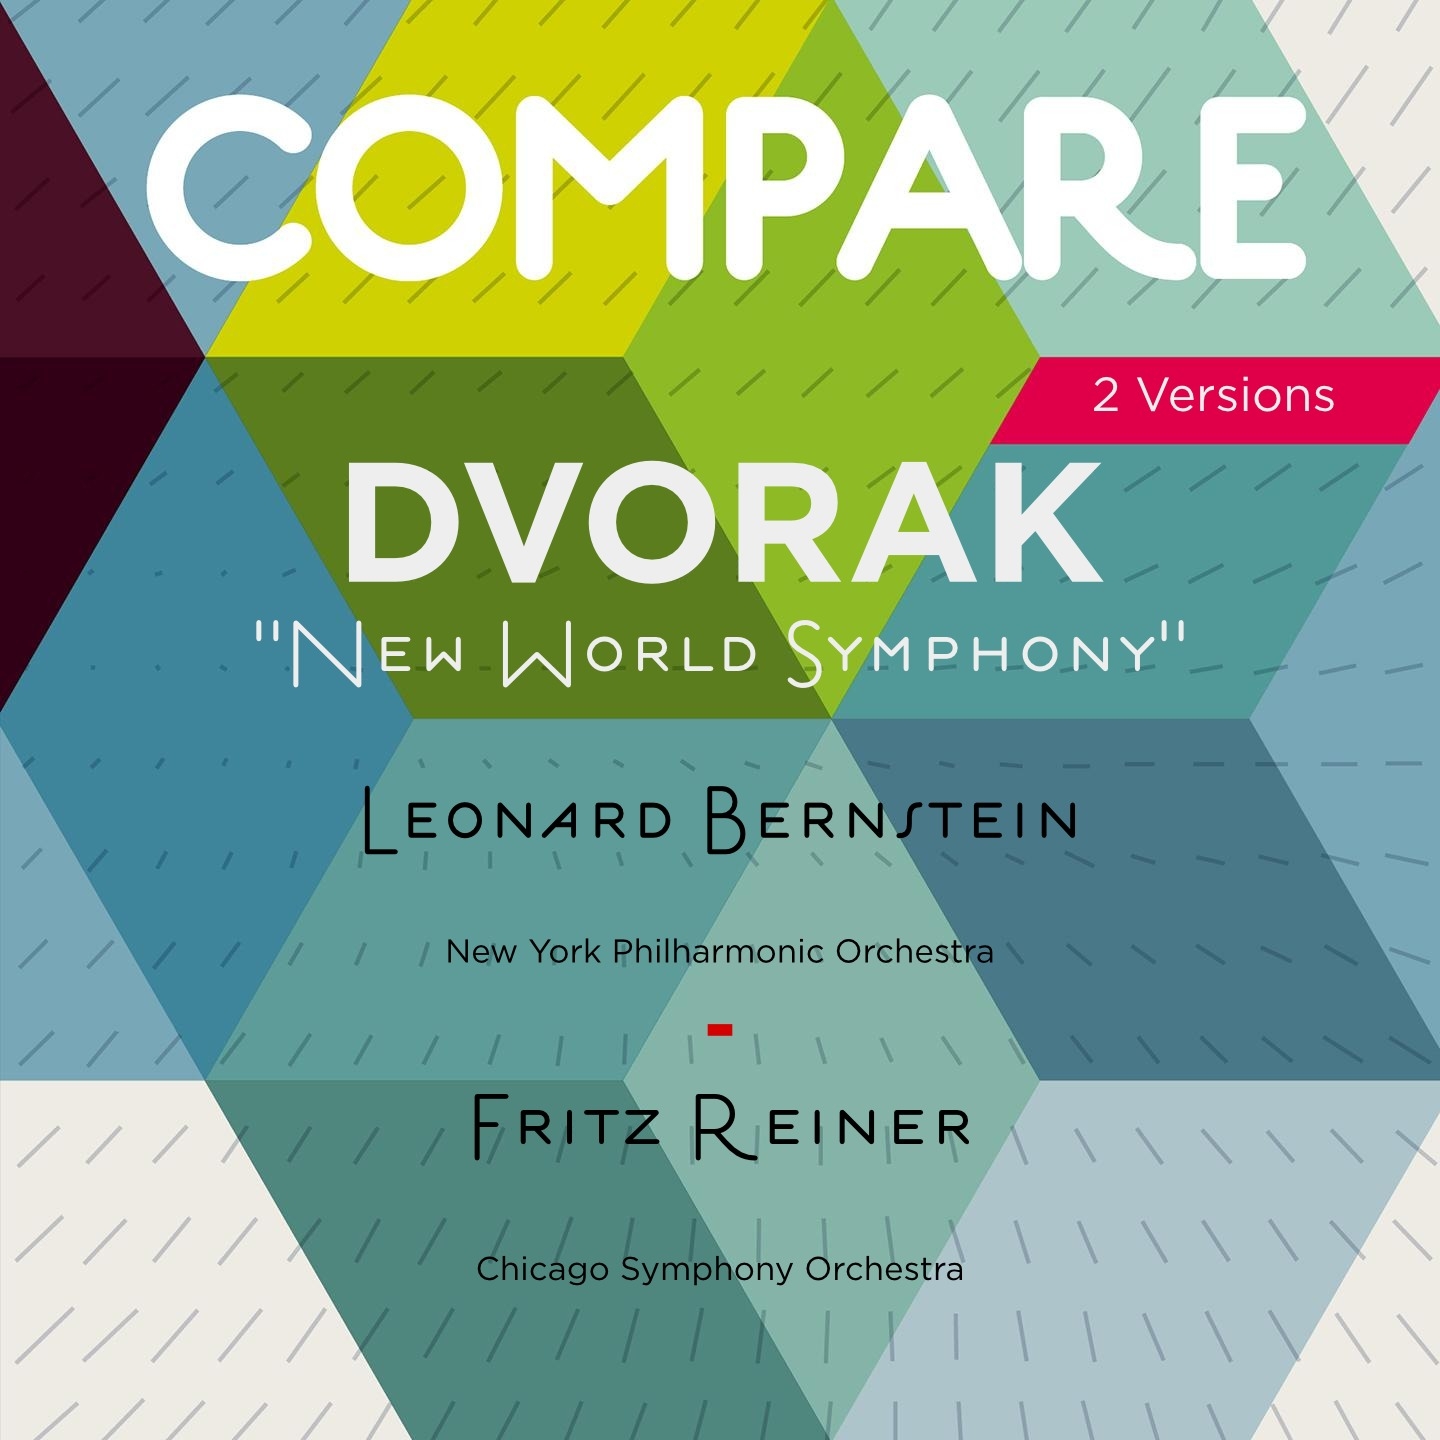 Dvoa k: Symphony No. 9, Leonard Bernstein vs. Fritz Reiner